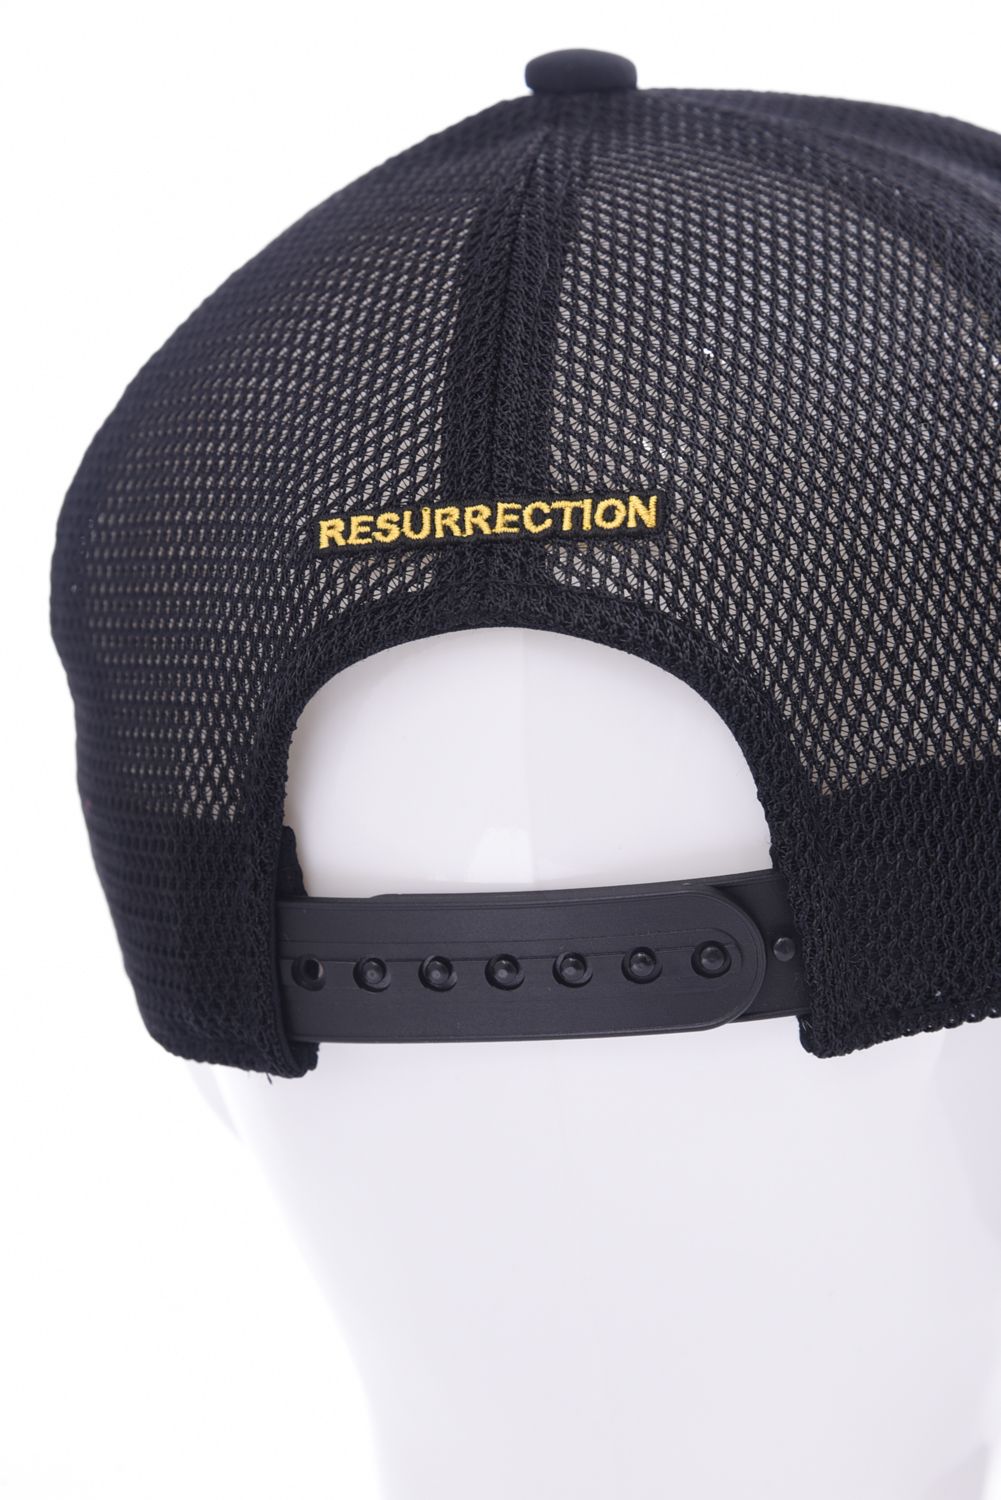 Resurrection - GM BLIM MESH CAP UV / ブランドオリジナル 